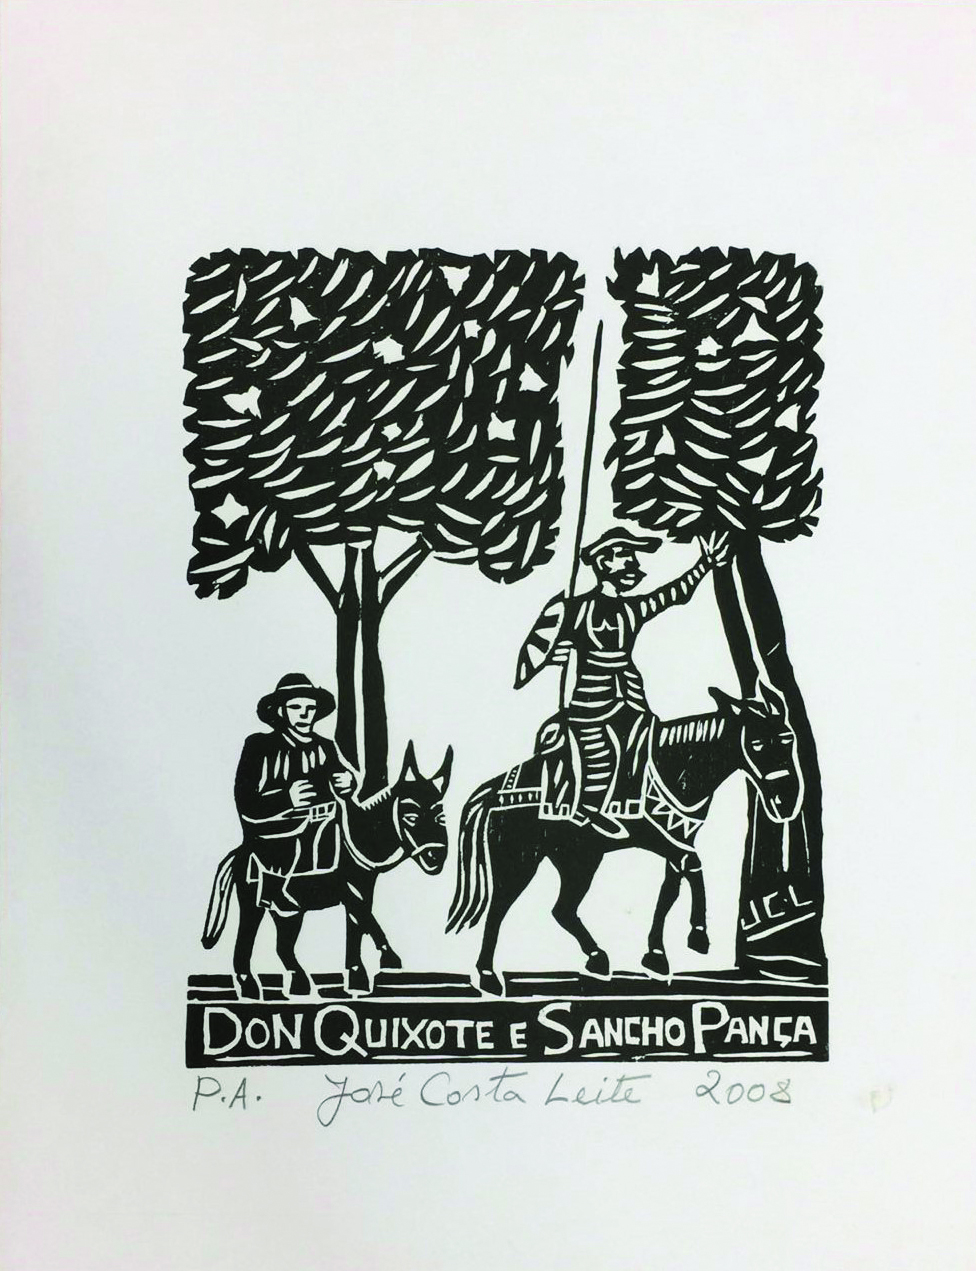 Don Quixote e Sancho Pança, 2008.